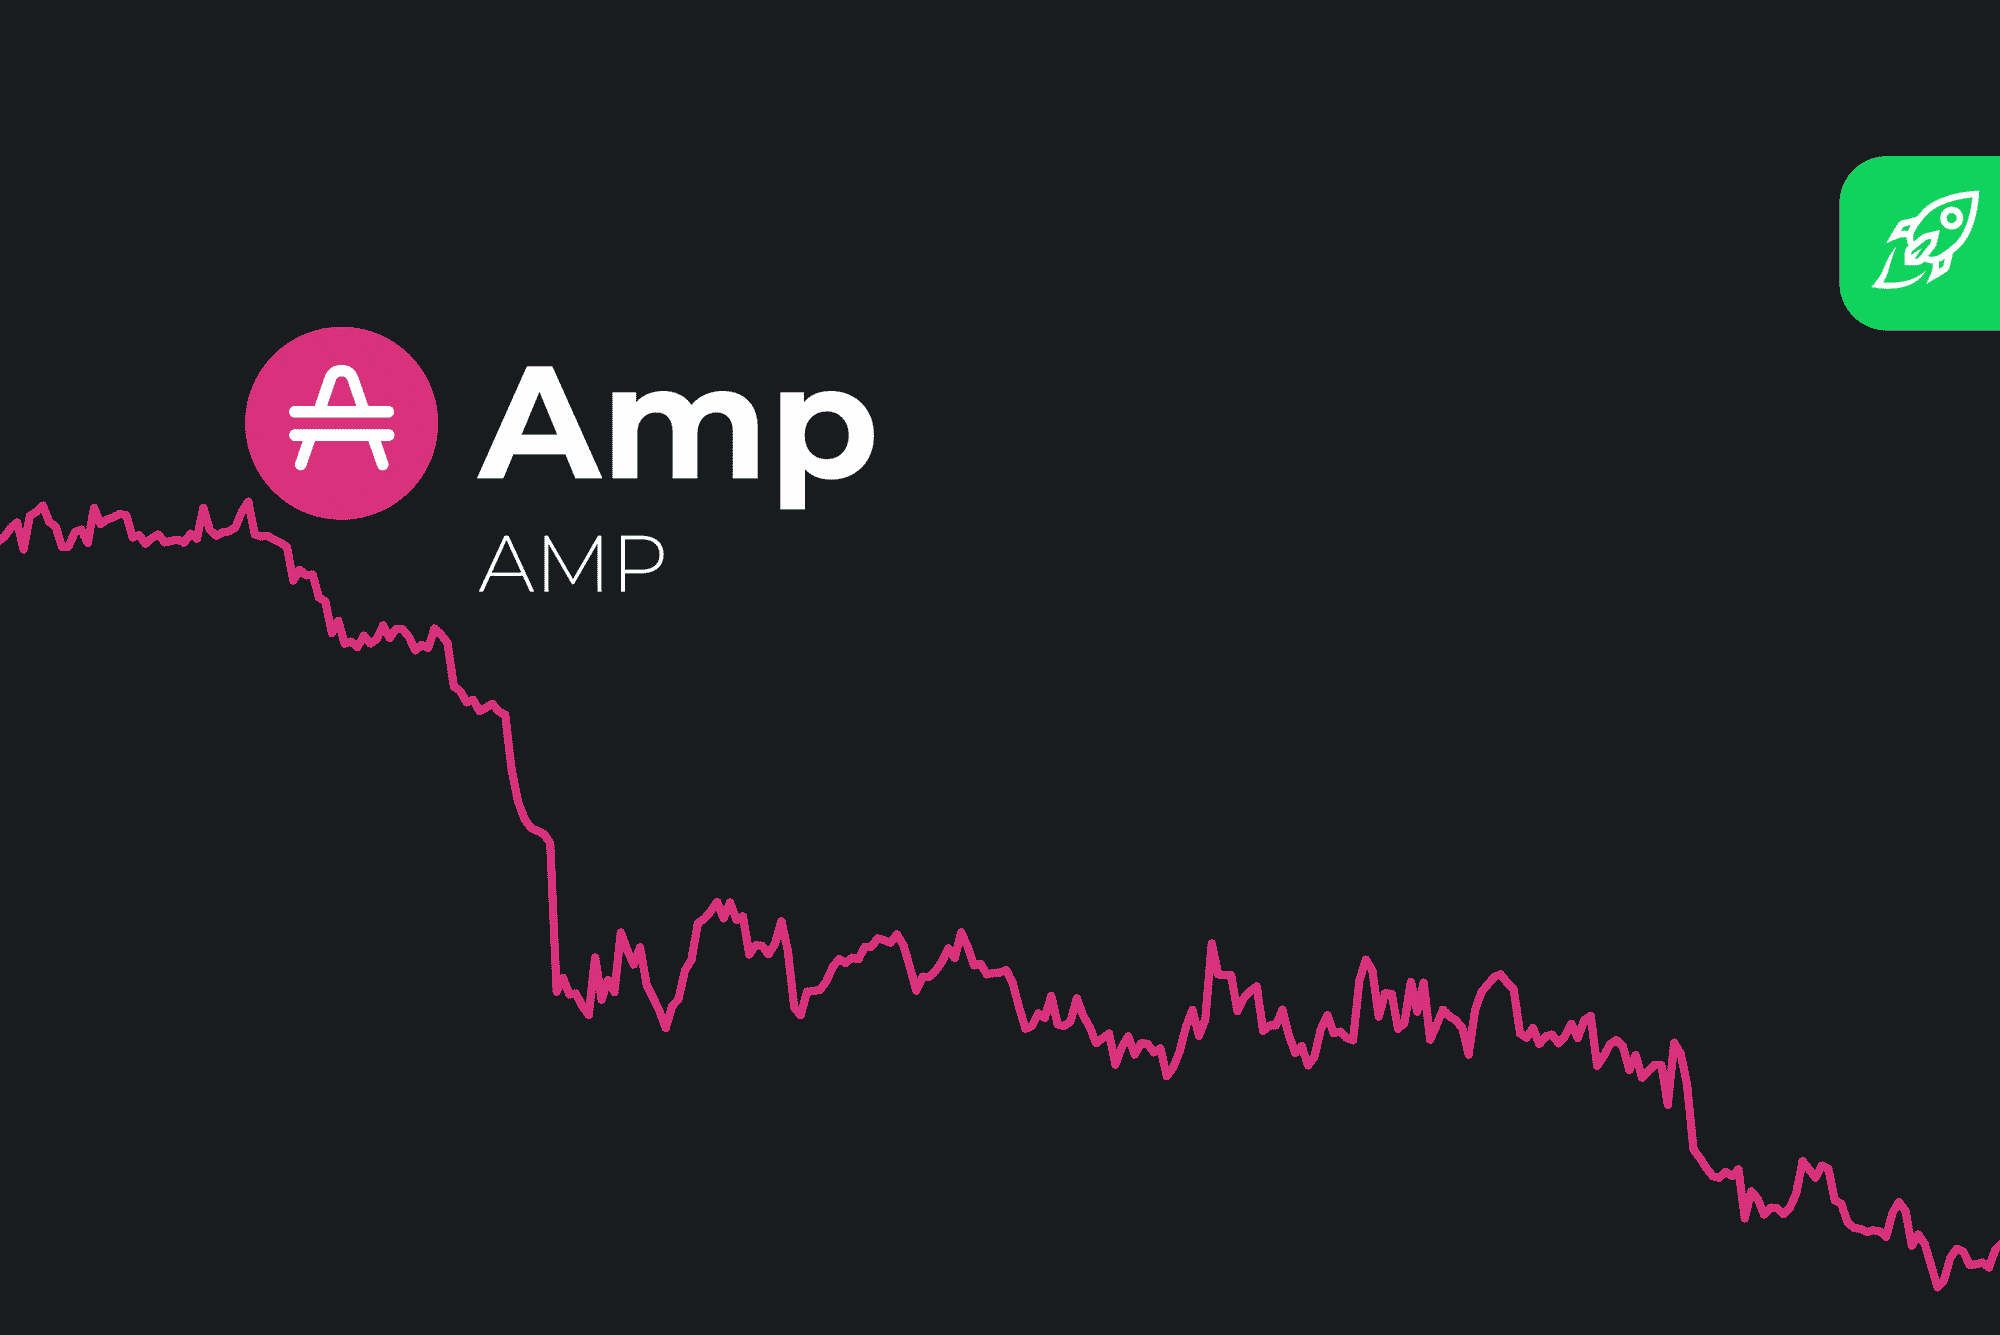 amp crypto price prediction 2040